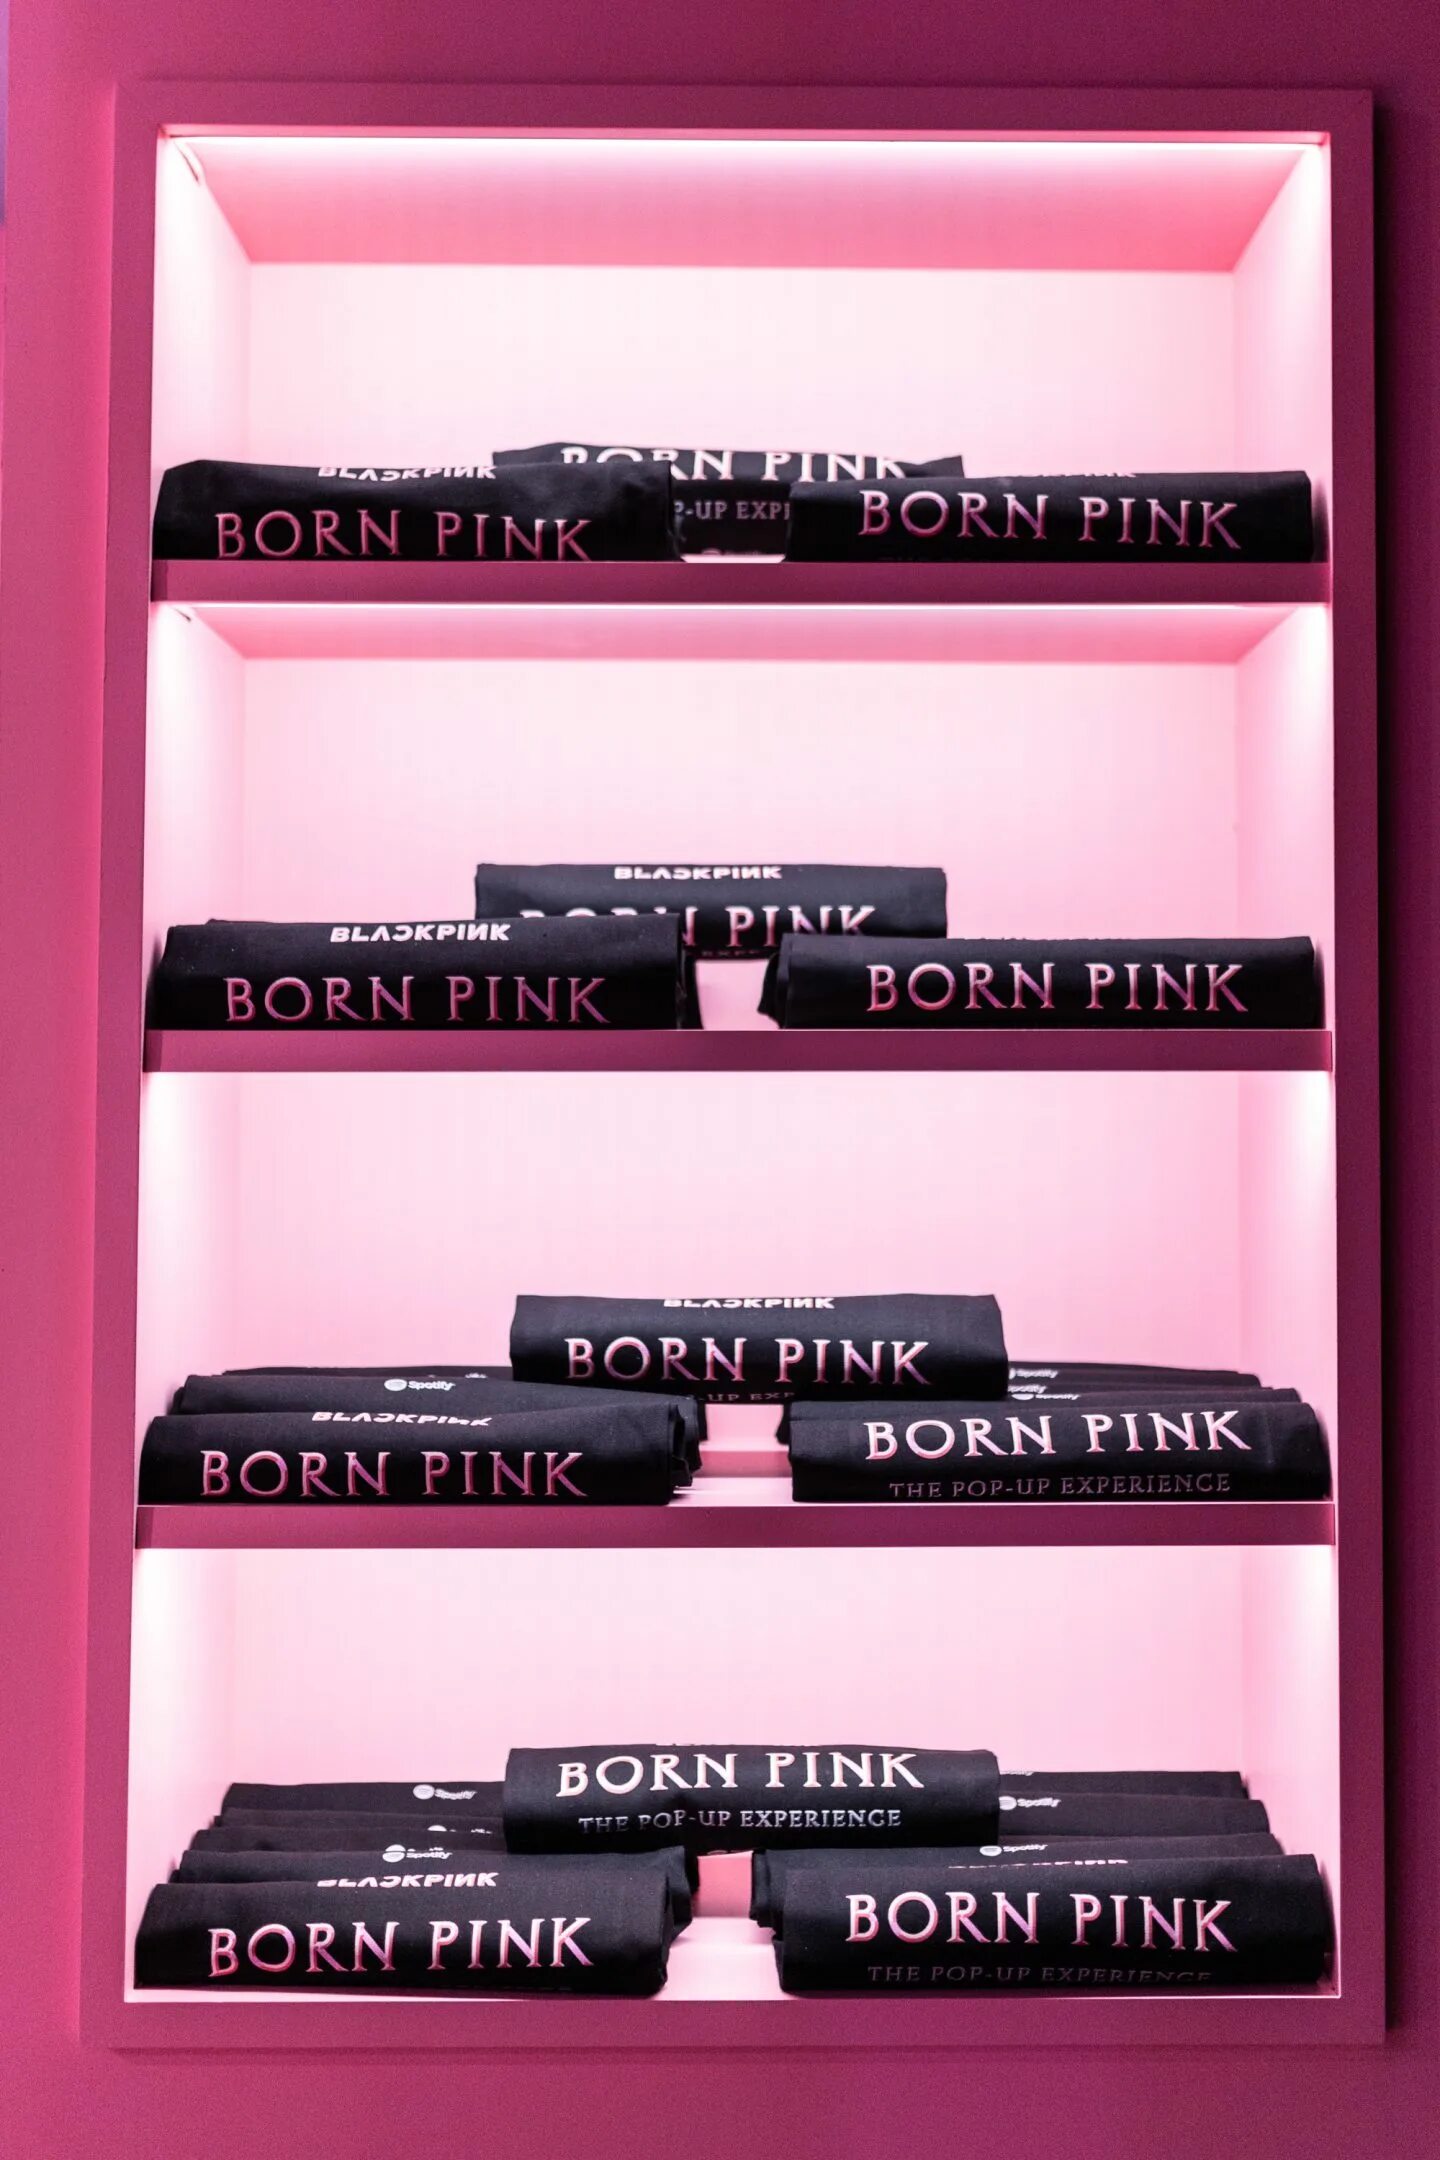 Борн Пинк. Борн Пинк альбом. Born Pink обложка. Наполнение born Pink. Born pink альбом